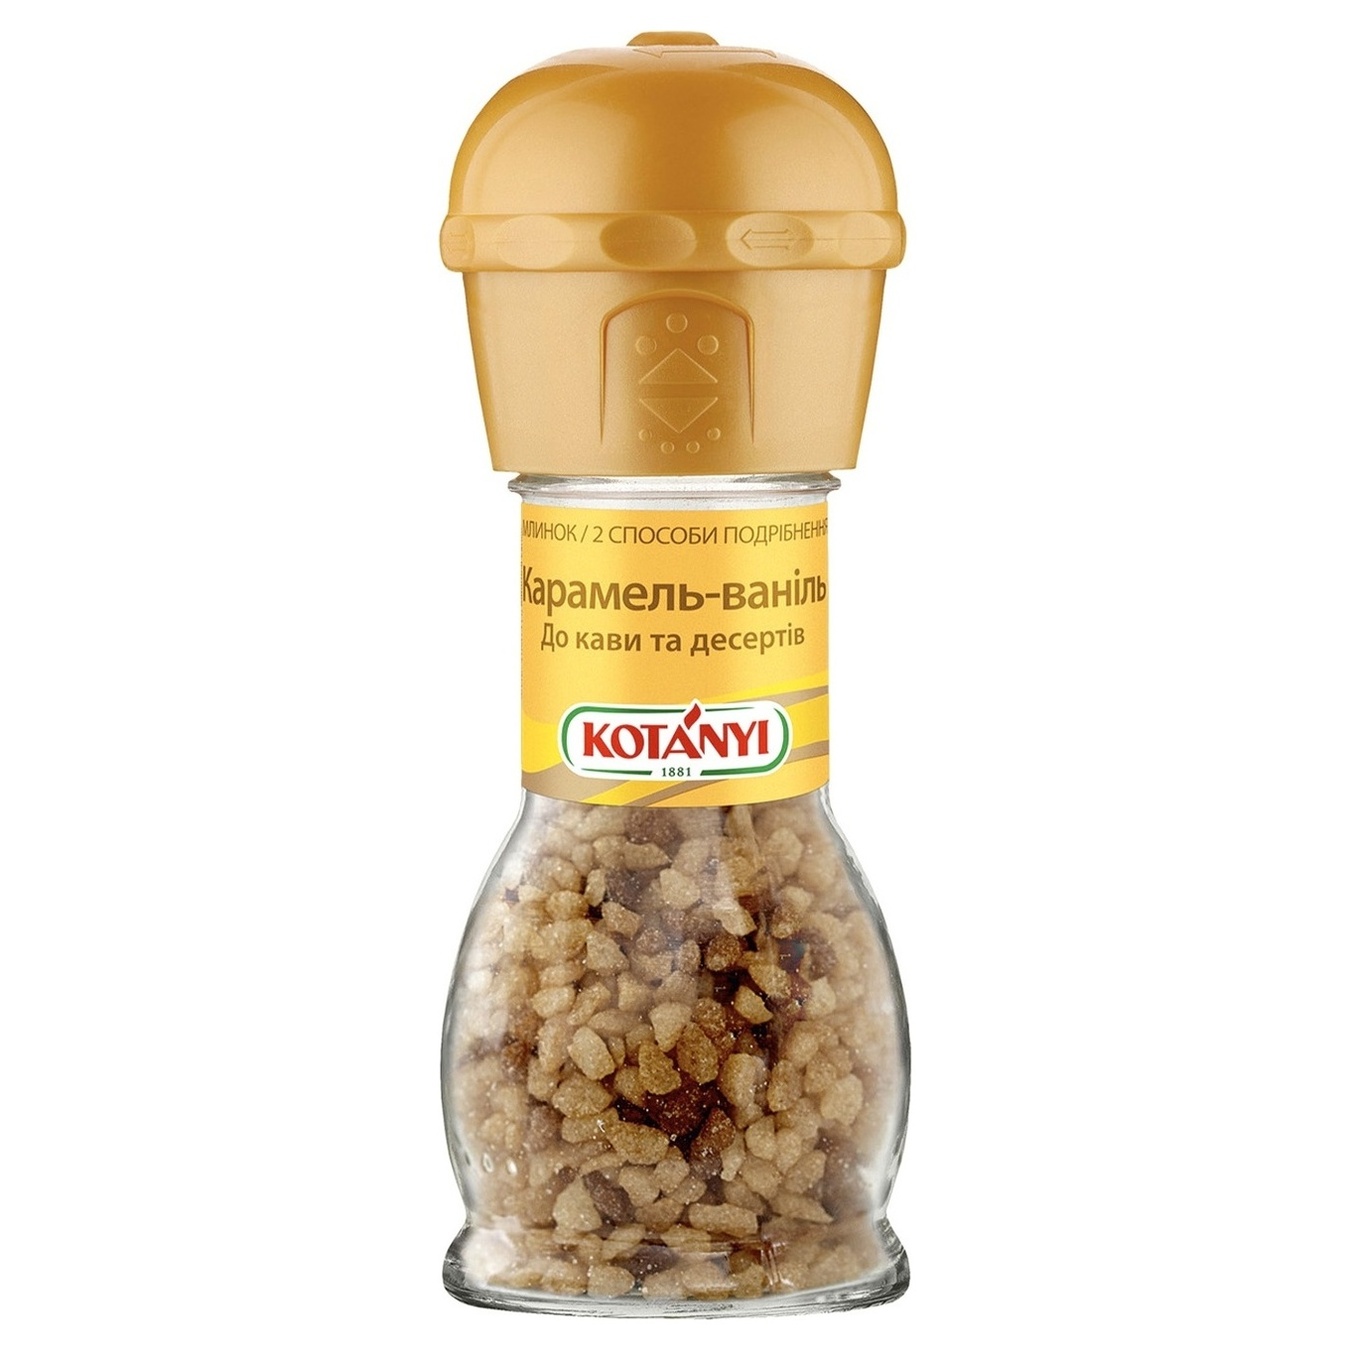 Caramel-vanilla Kotanyi grinder 53g